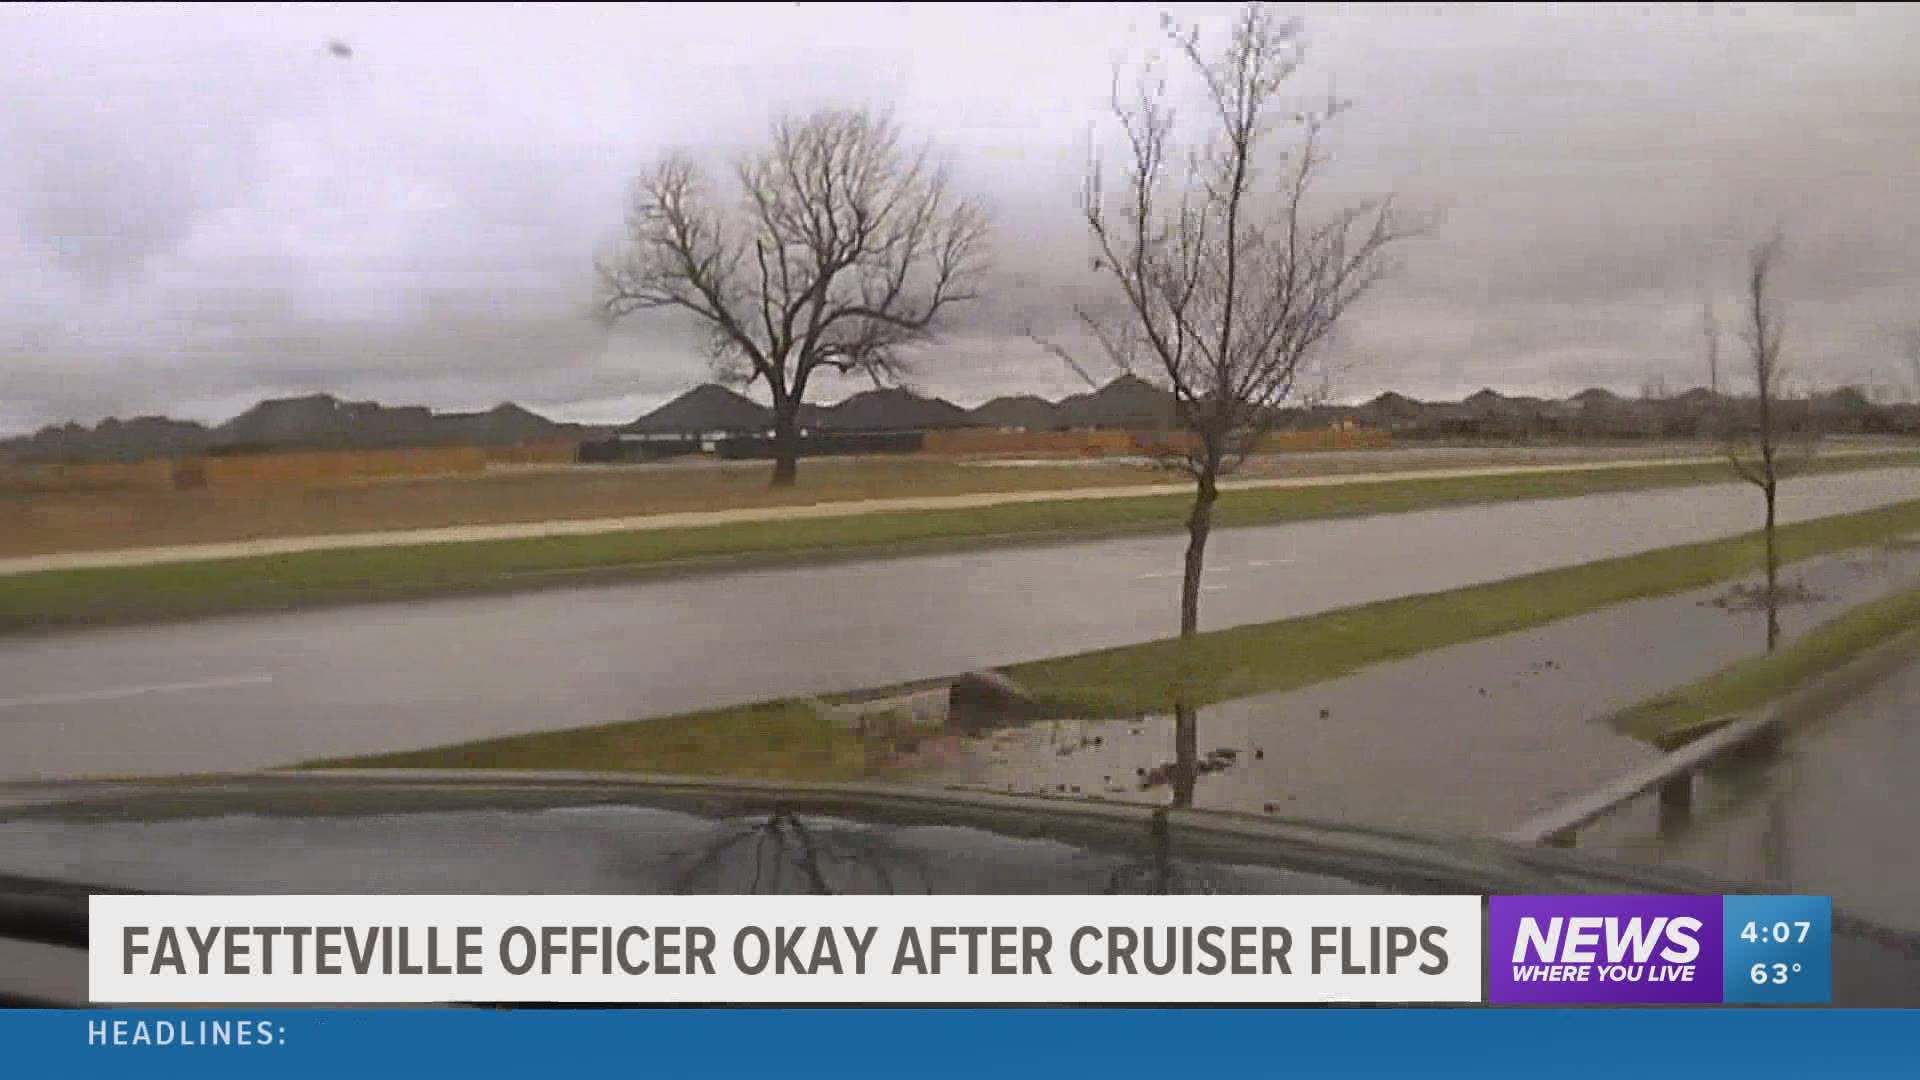 Fayetteville Police Officer okay after cruiser flips